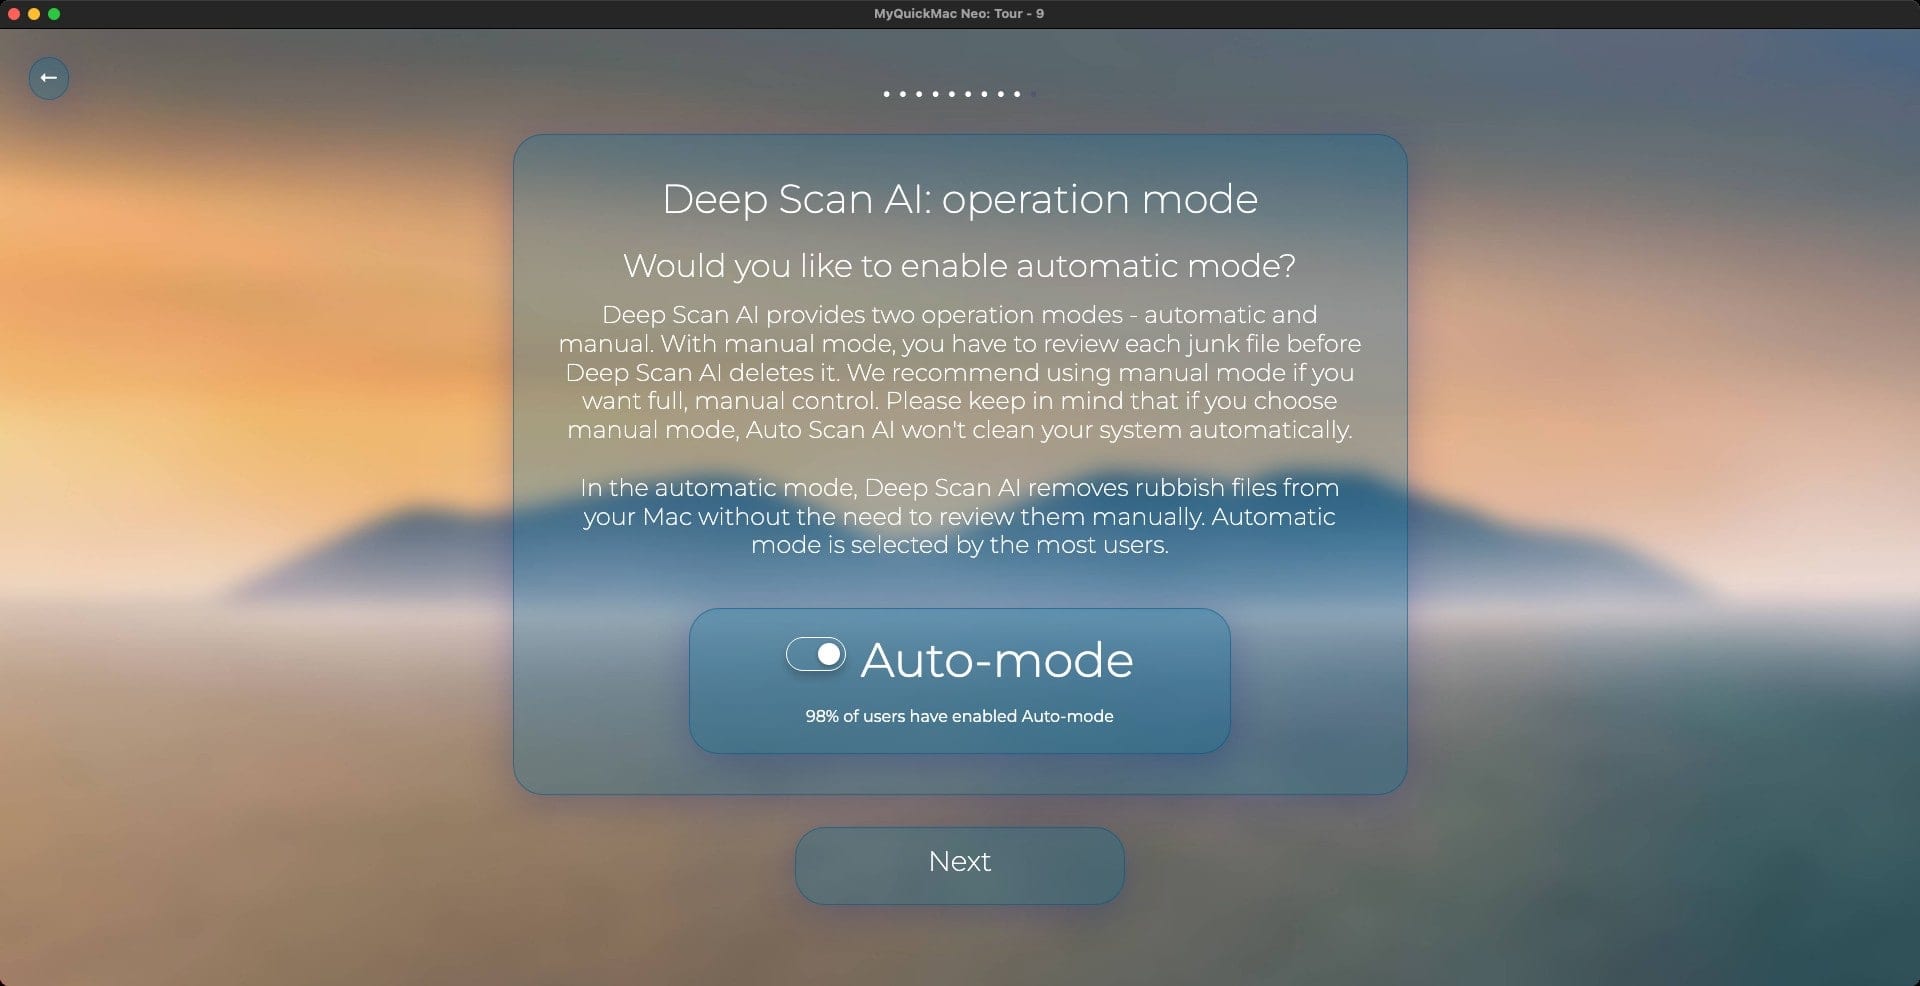 Screenshot of 'Setup Tour' window of MyQuickMac Neo that allows user to configure the Deep Scan AI operation mode